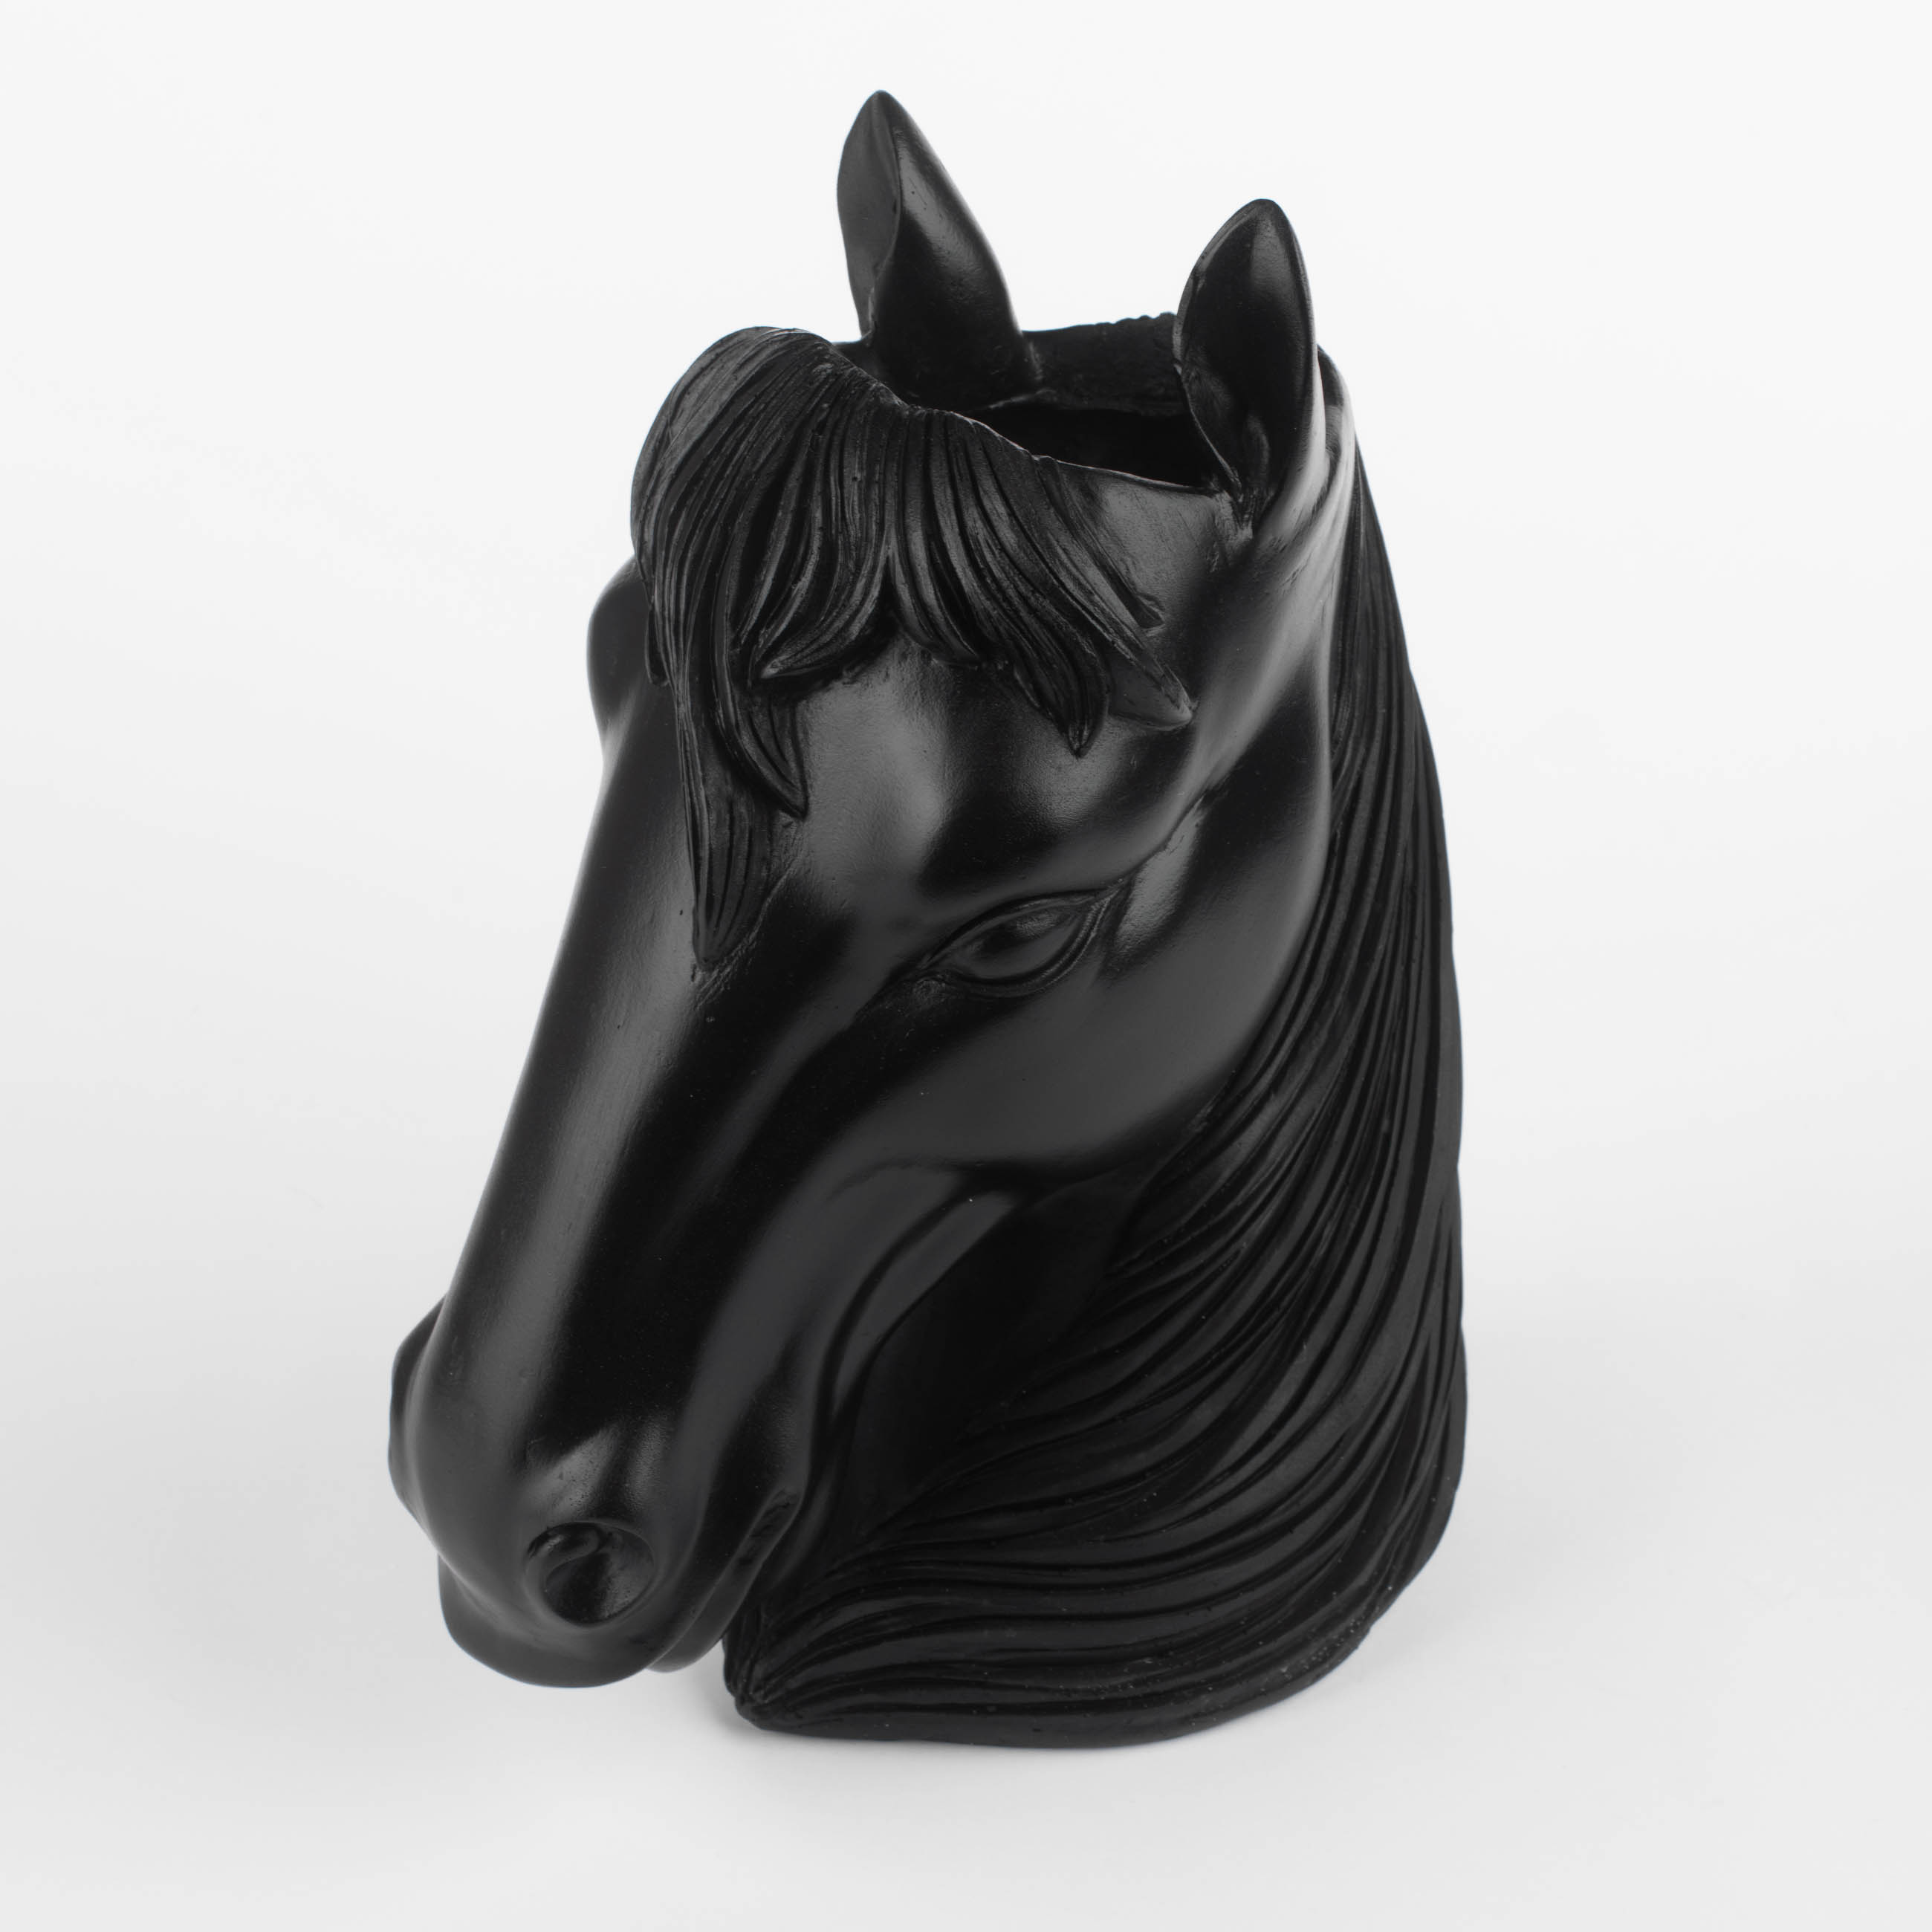 Decorative vase, 25 cm, polyresin, black, Horse head, Horse изображение № 4